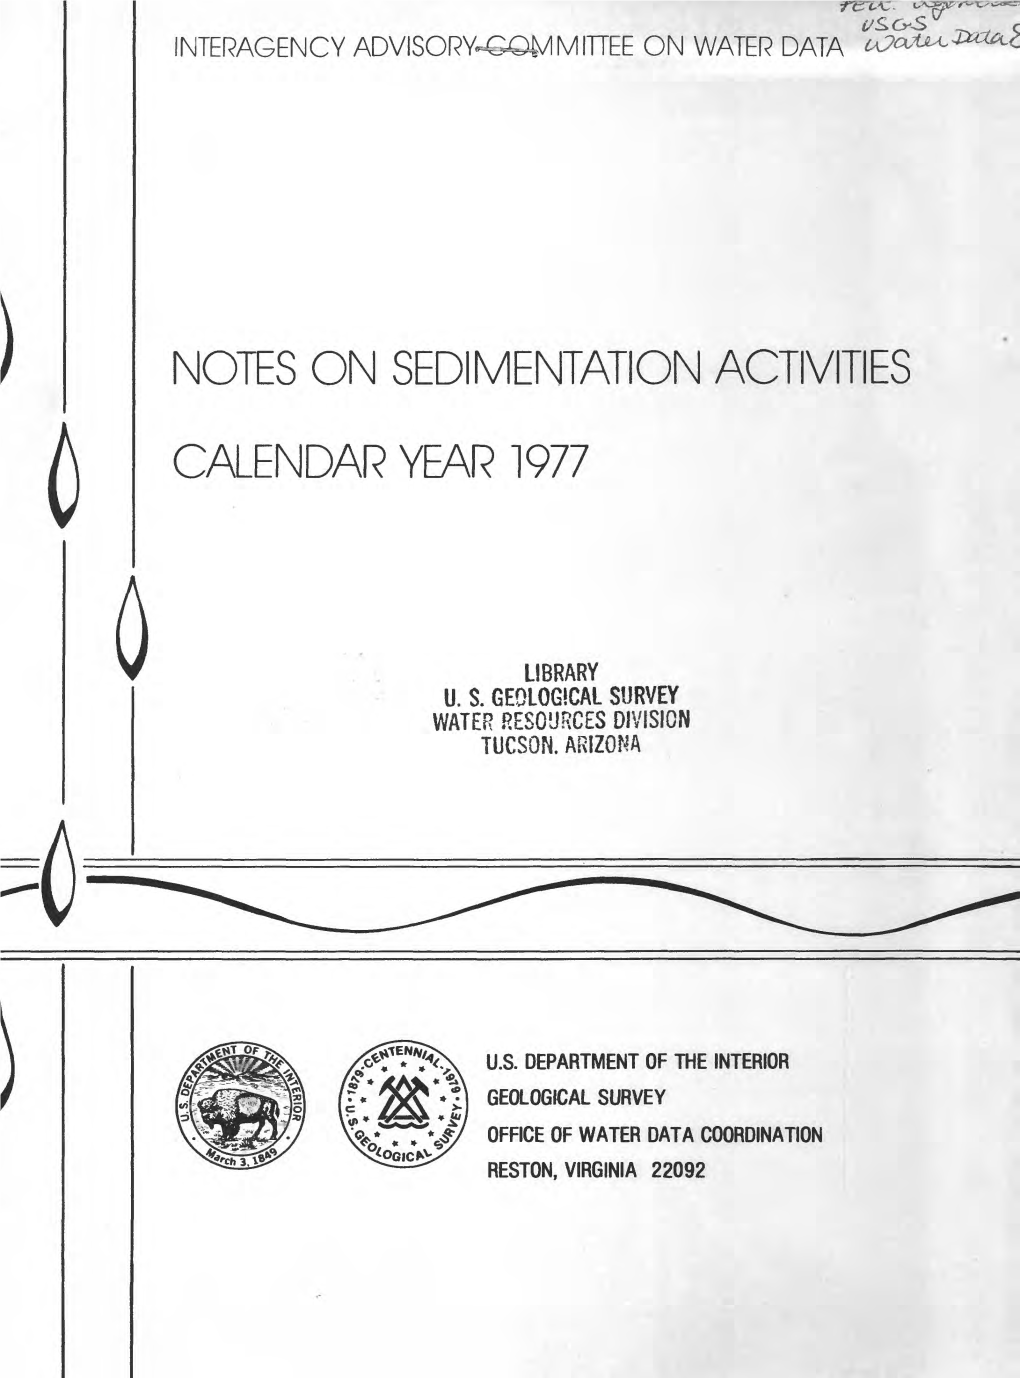 Notes on Sedimentation Activities Calendar Year 1977